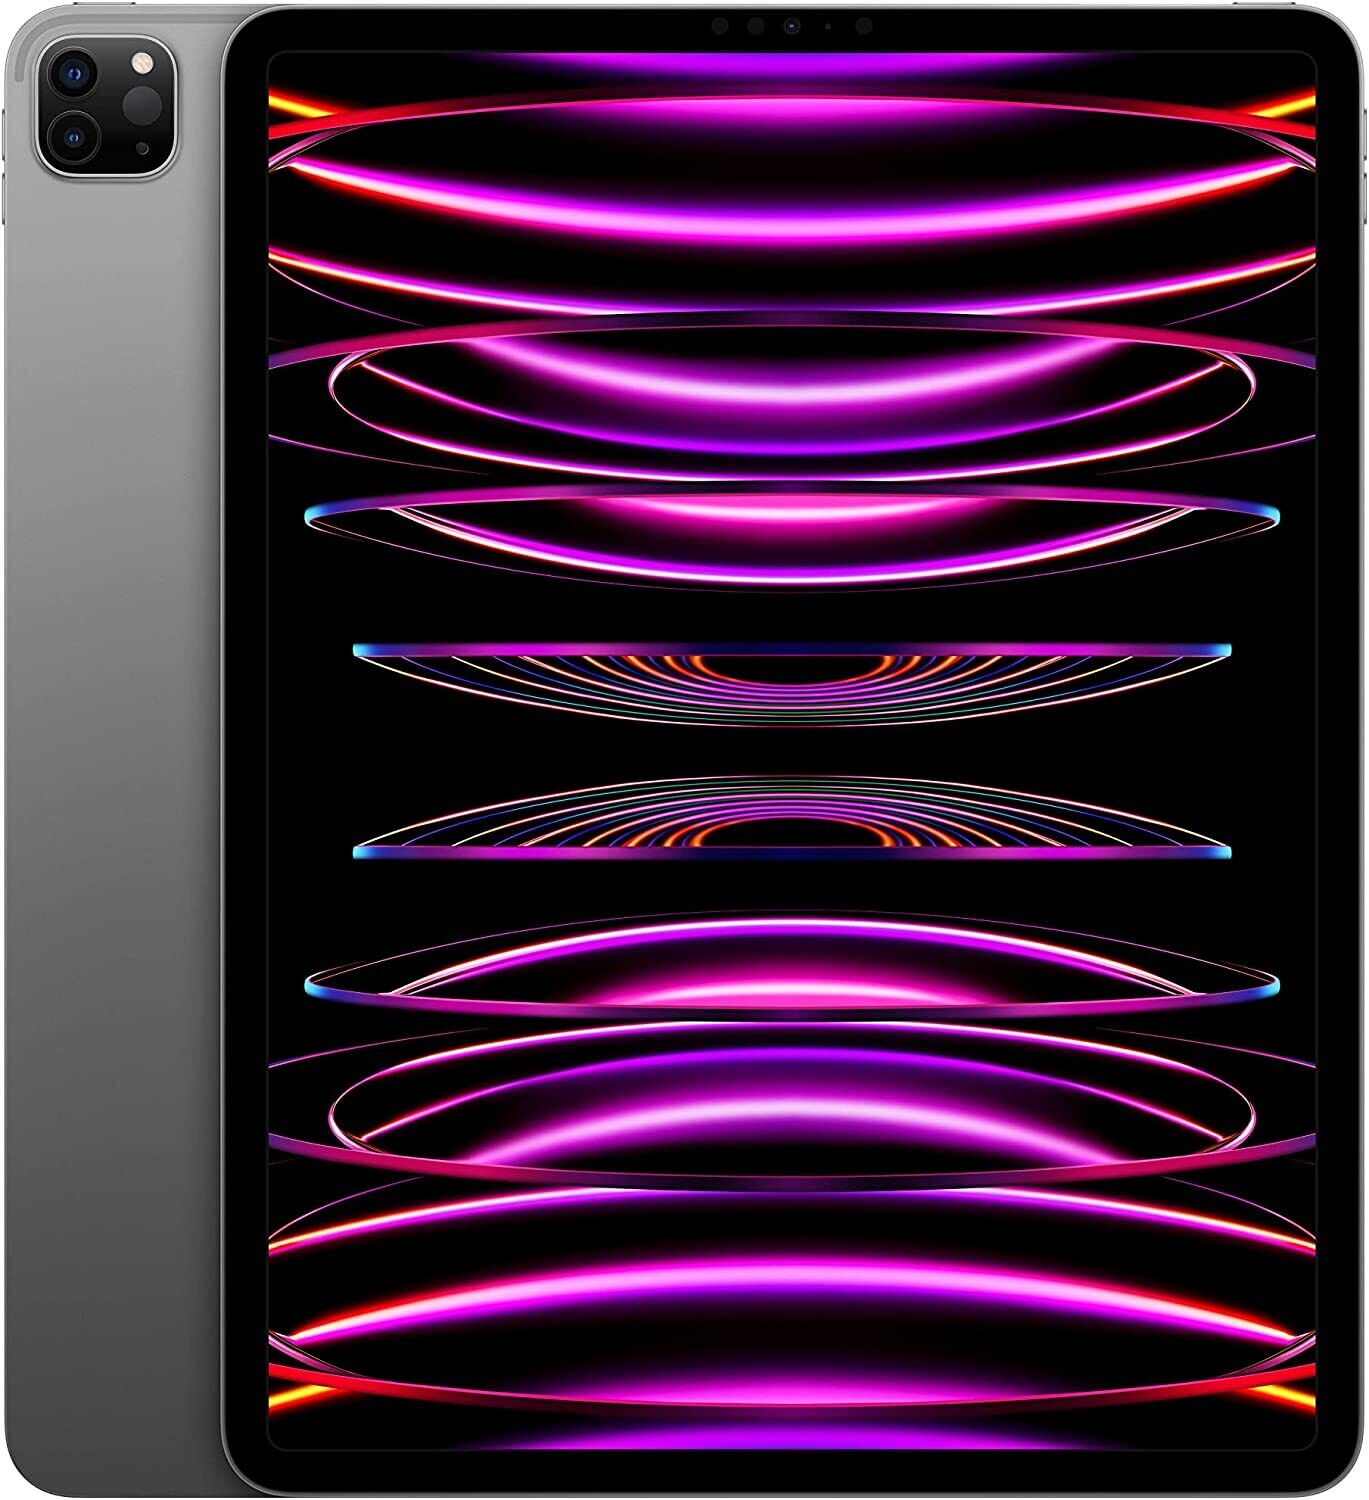 2022 Apple 11-inch iPad Pro (Wi-Fi, 512GB) - Space Gray (4th Generation)